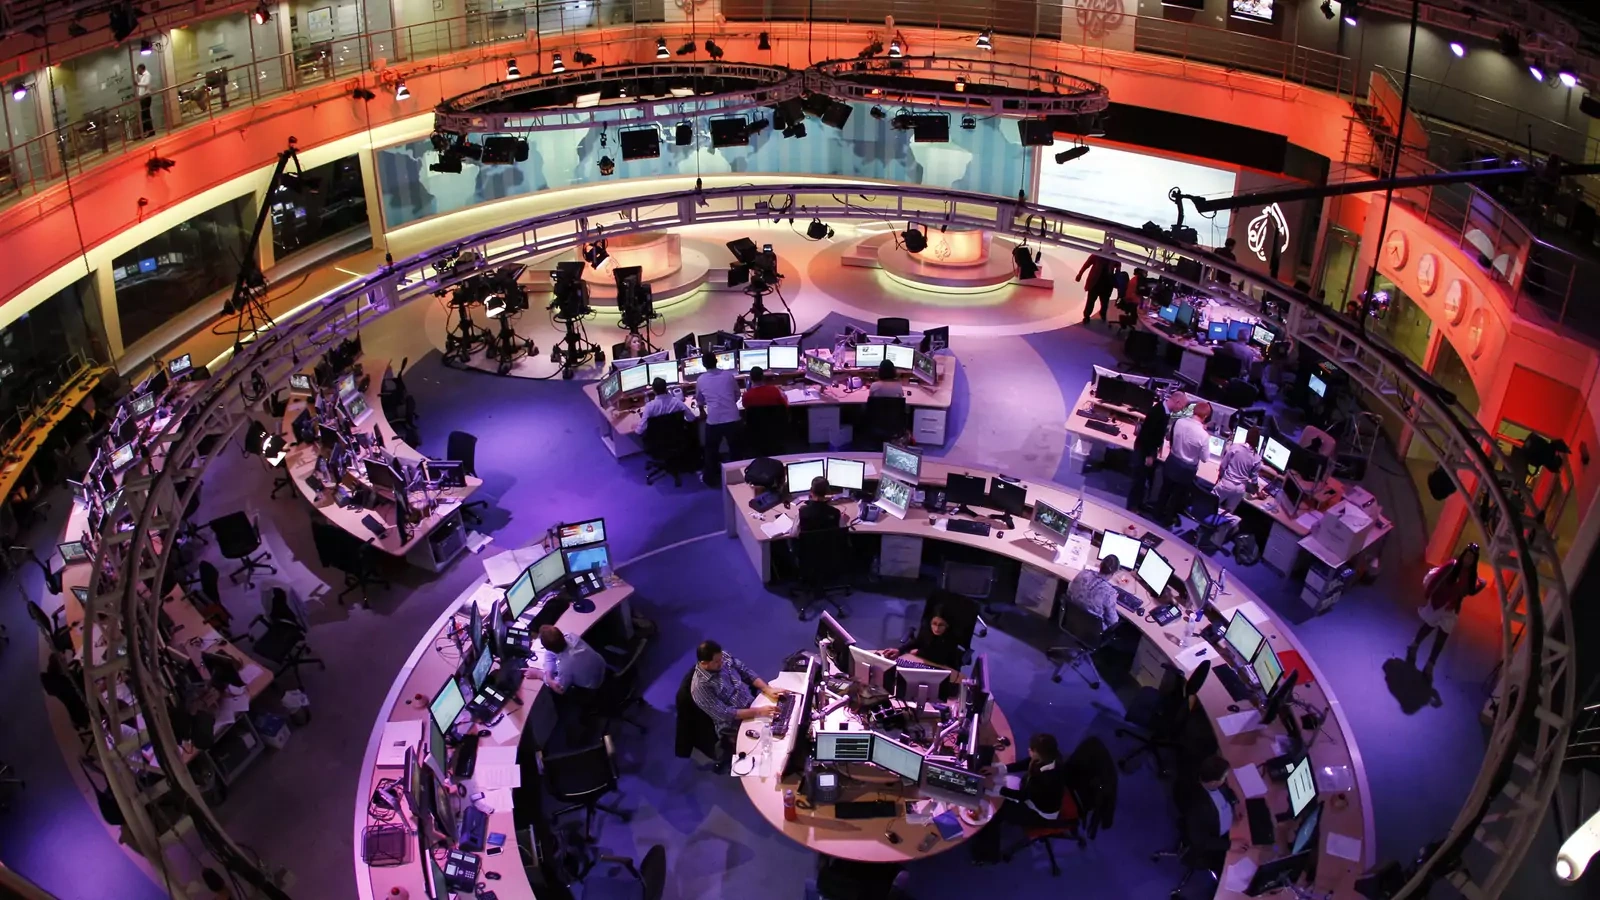 Al Jazeera English covers the 2011 Arab uprisings at its Doha headquarters.